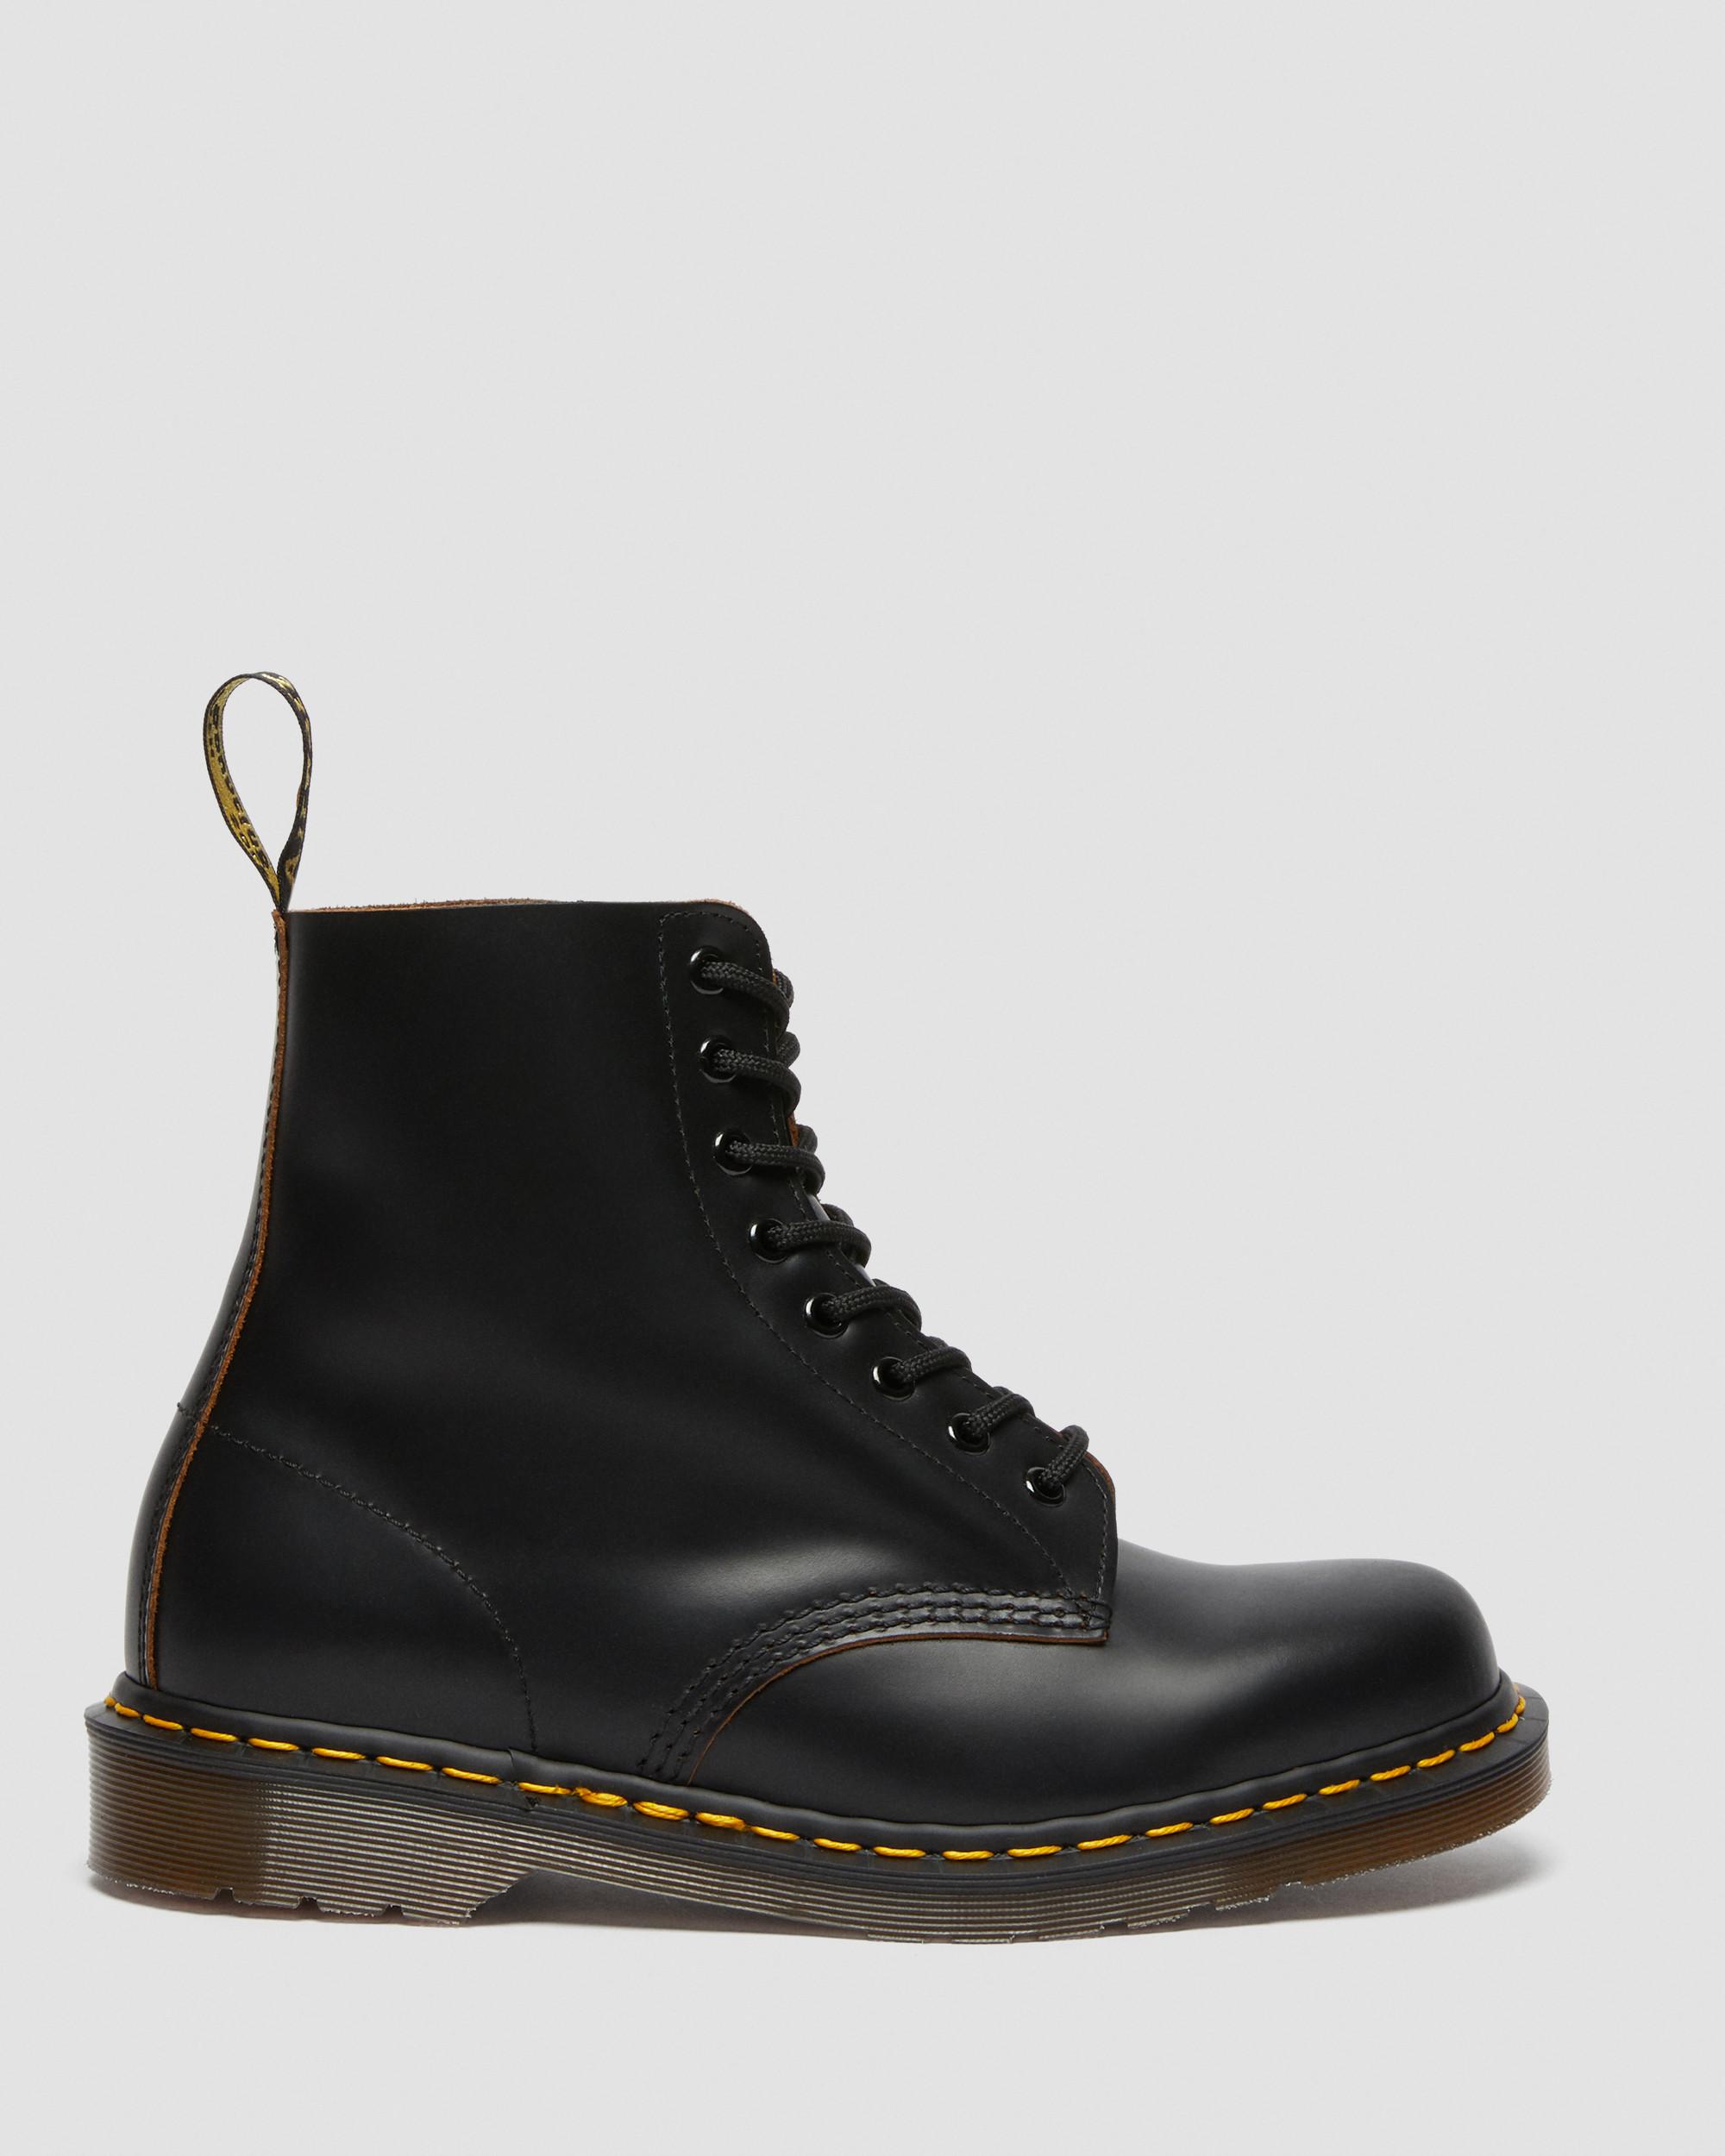 Vintage 1460 Quilon Leather Ankle Boots in Black | Dr. Martens